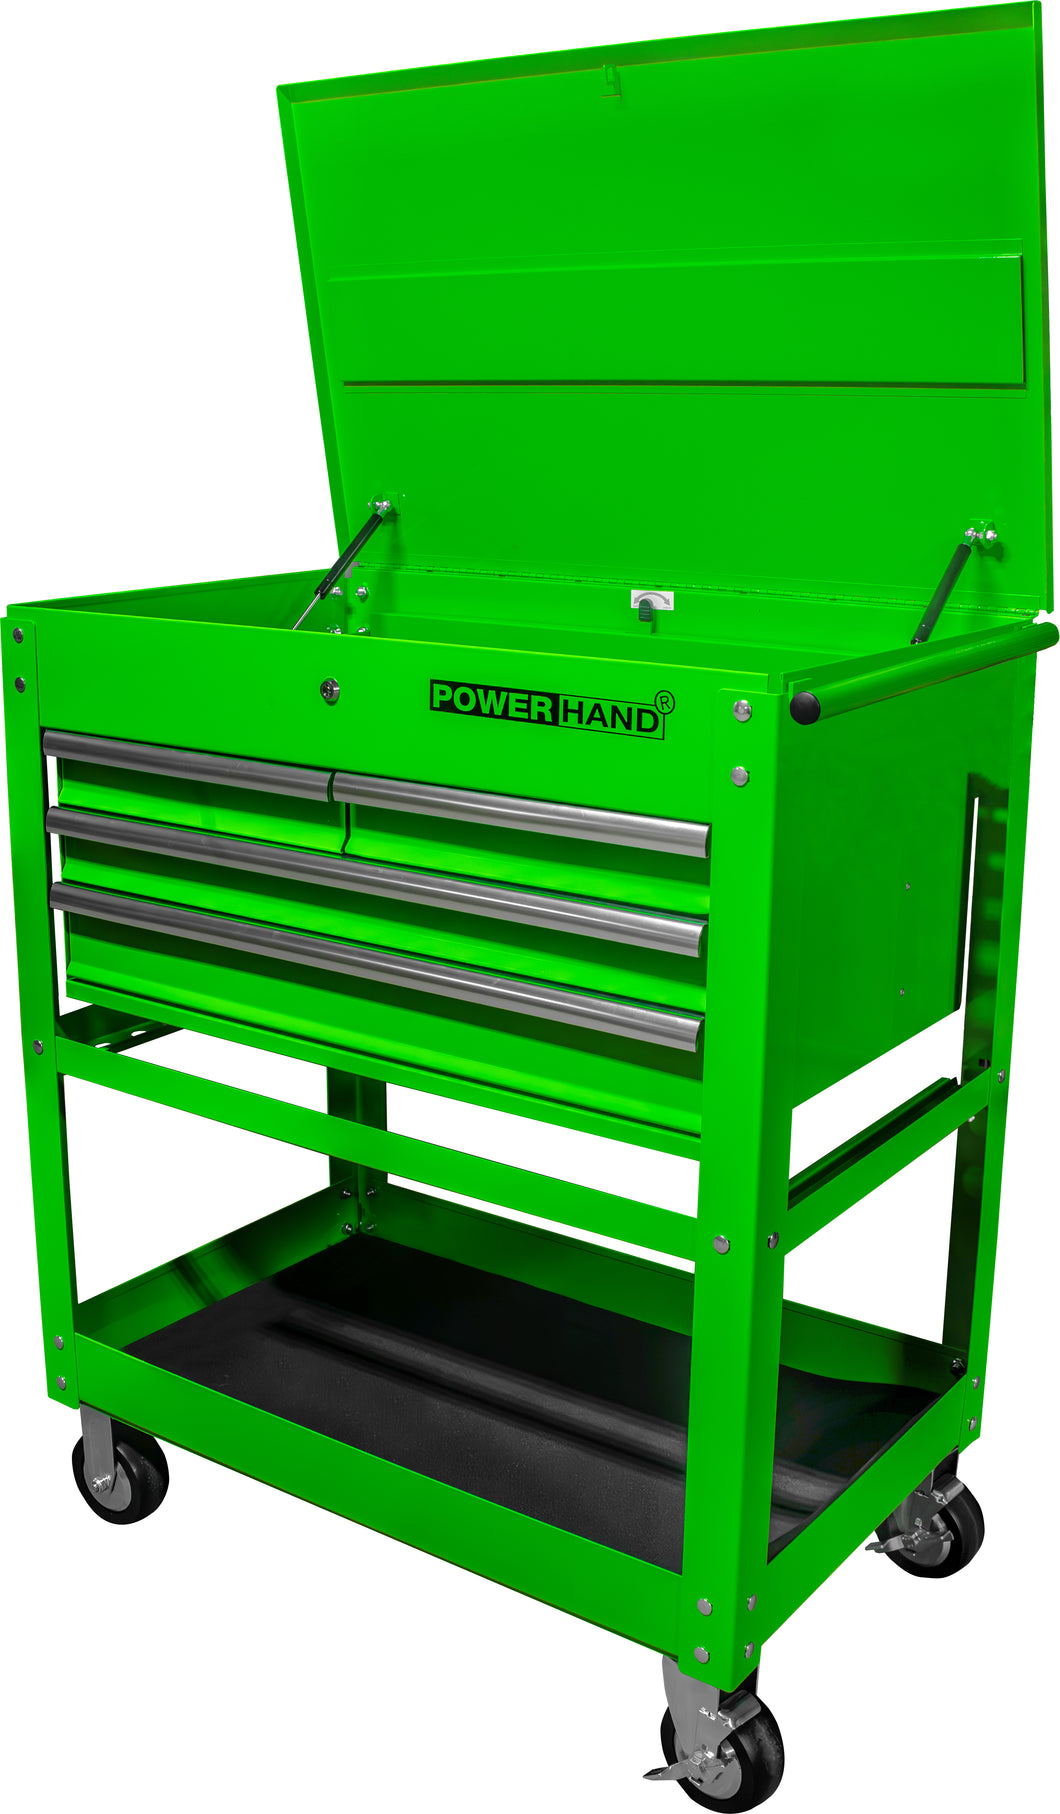 POWERHAND 4 Drawer Tool Cart - Green